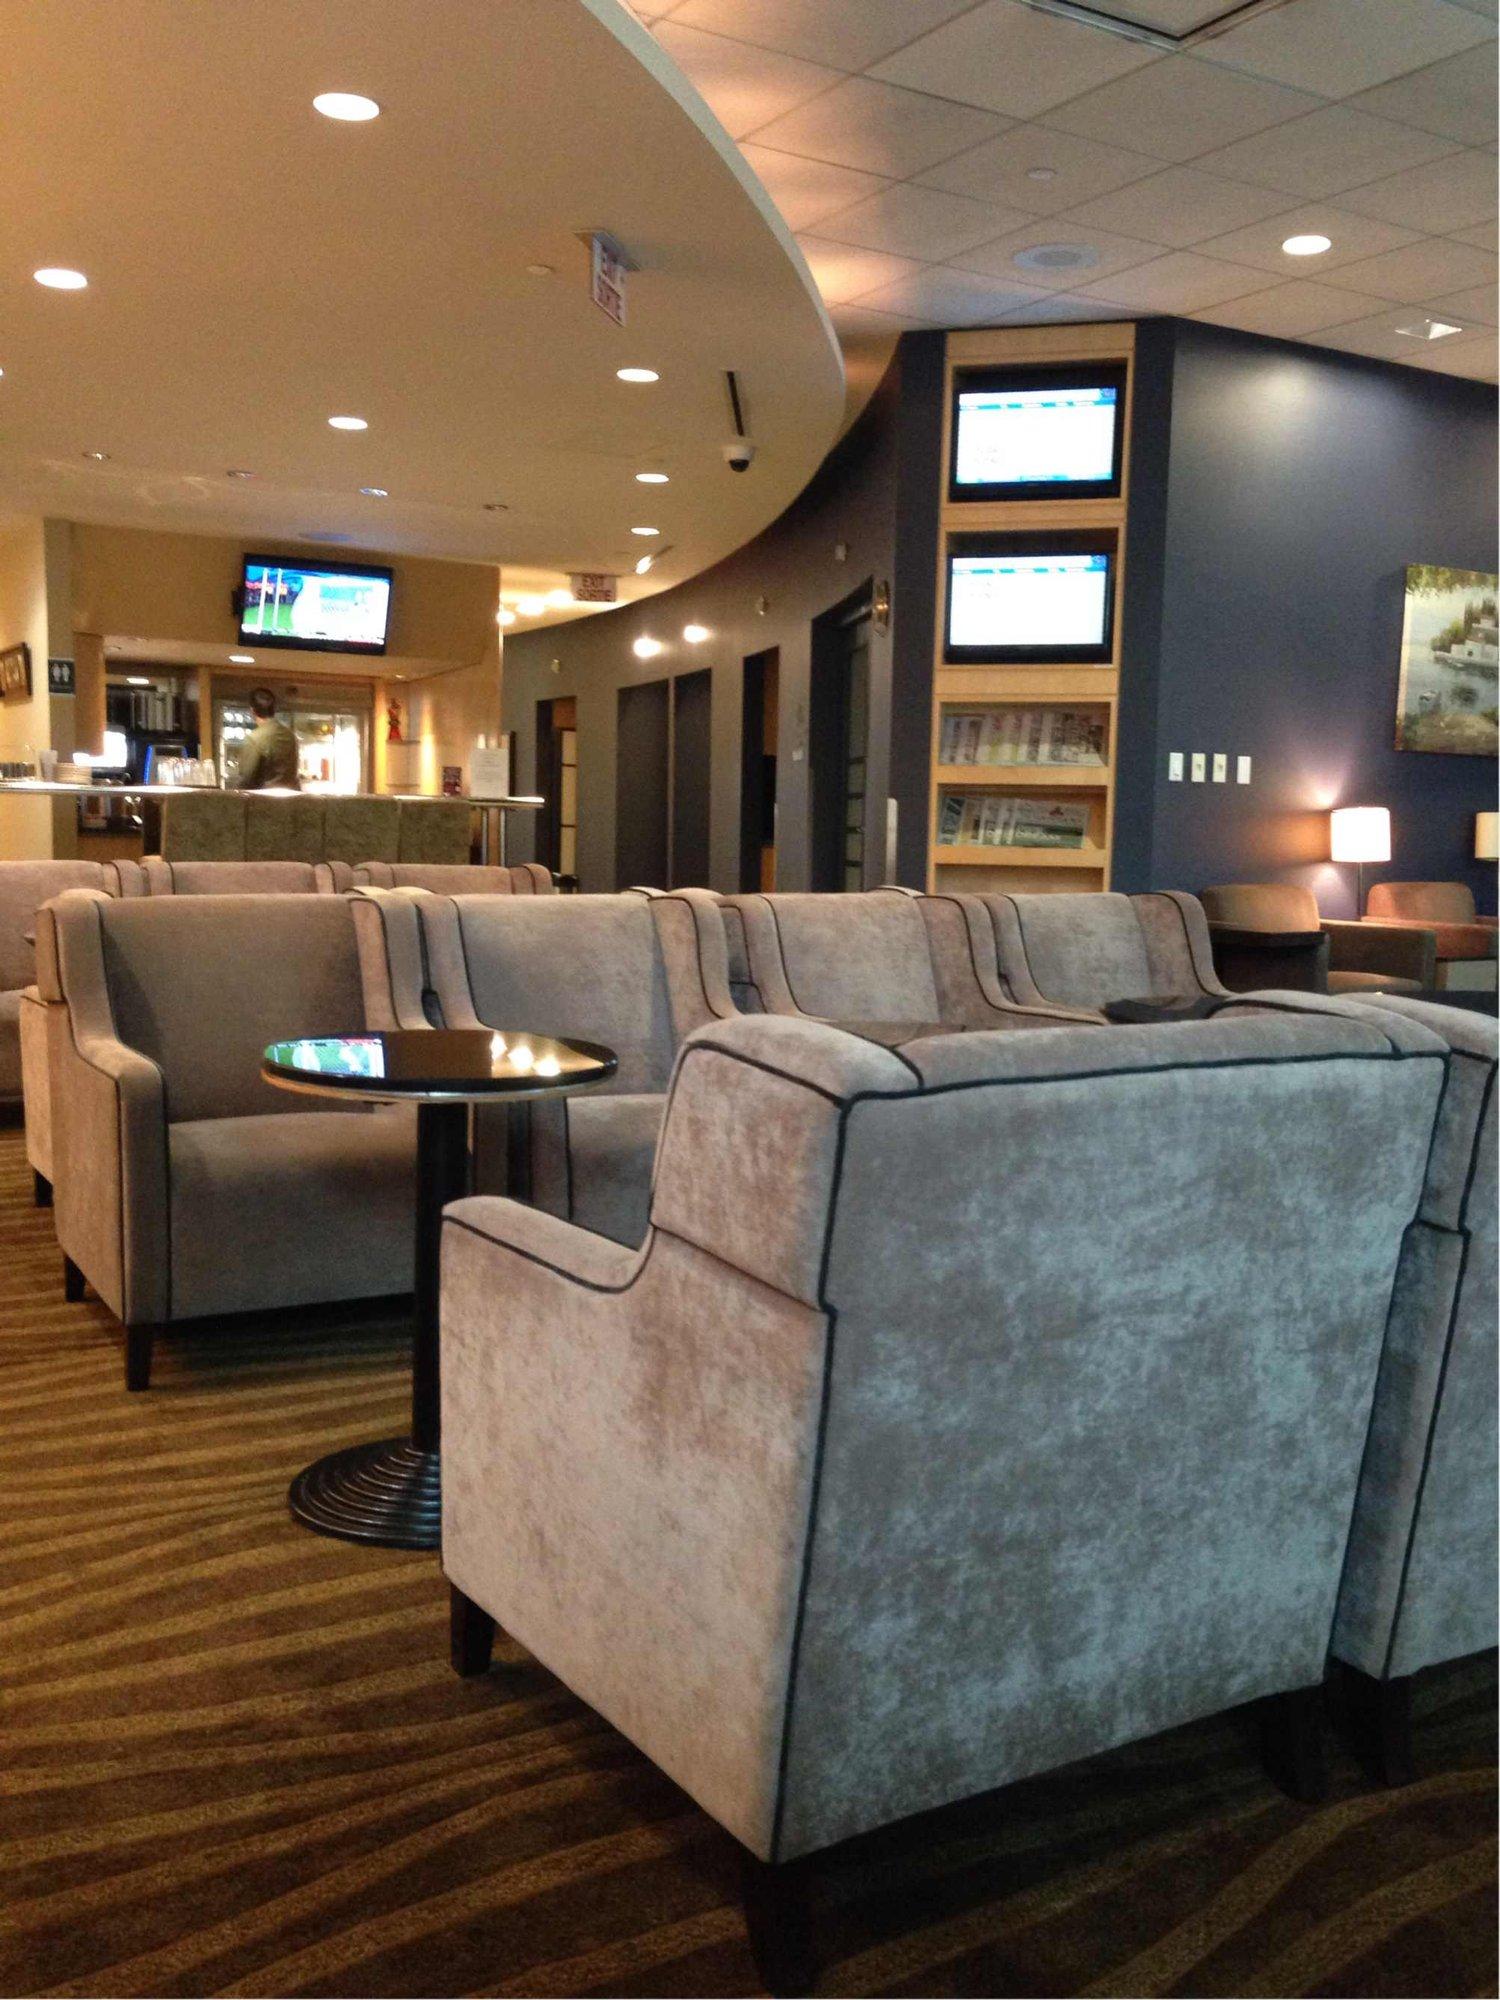 Plaza Premium Lounge image 9 of 57